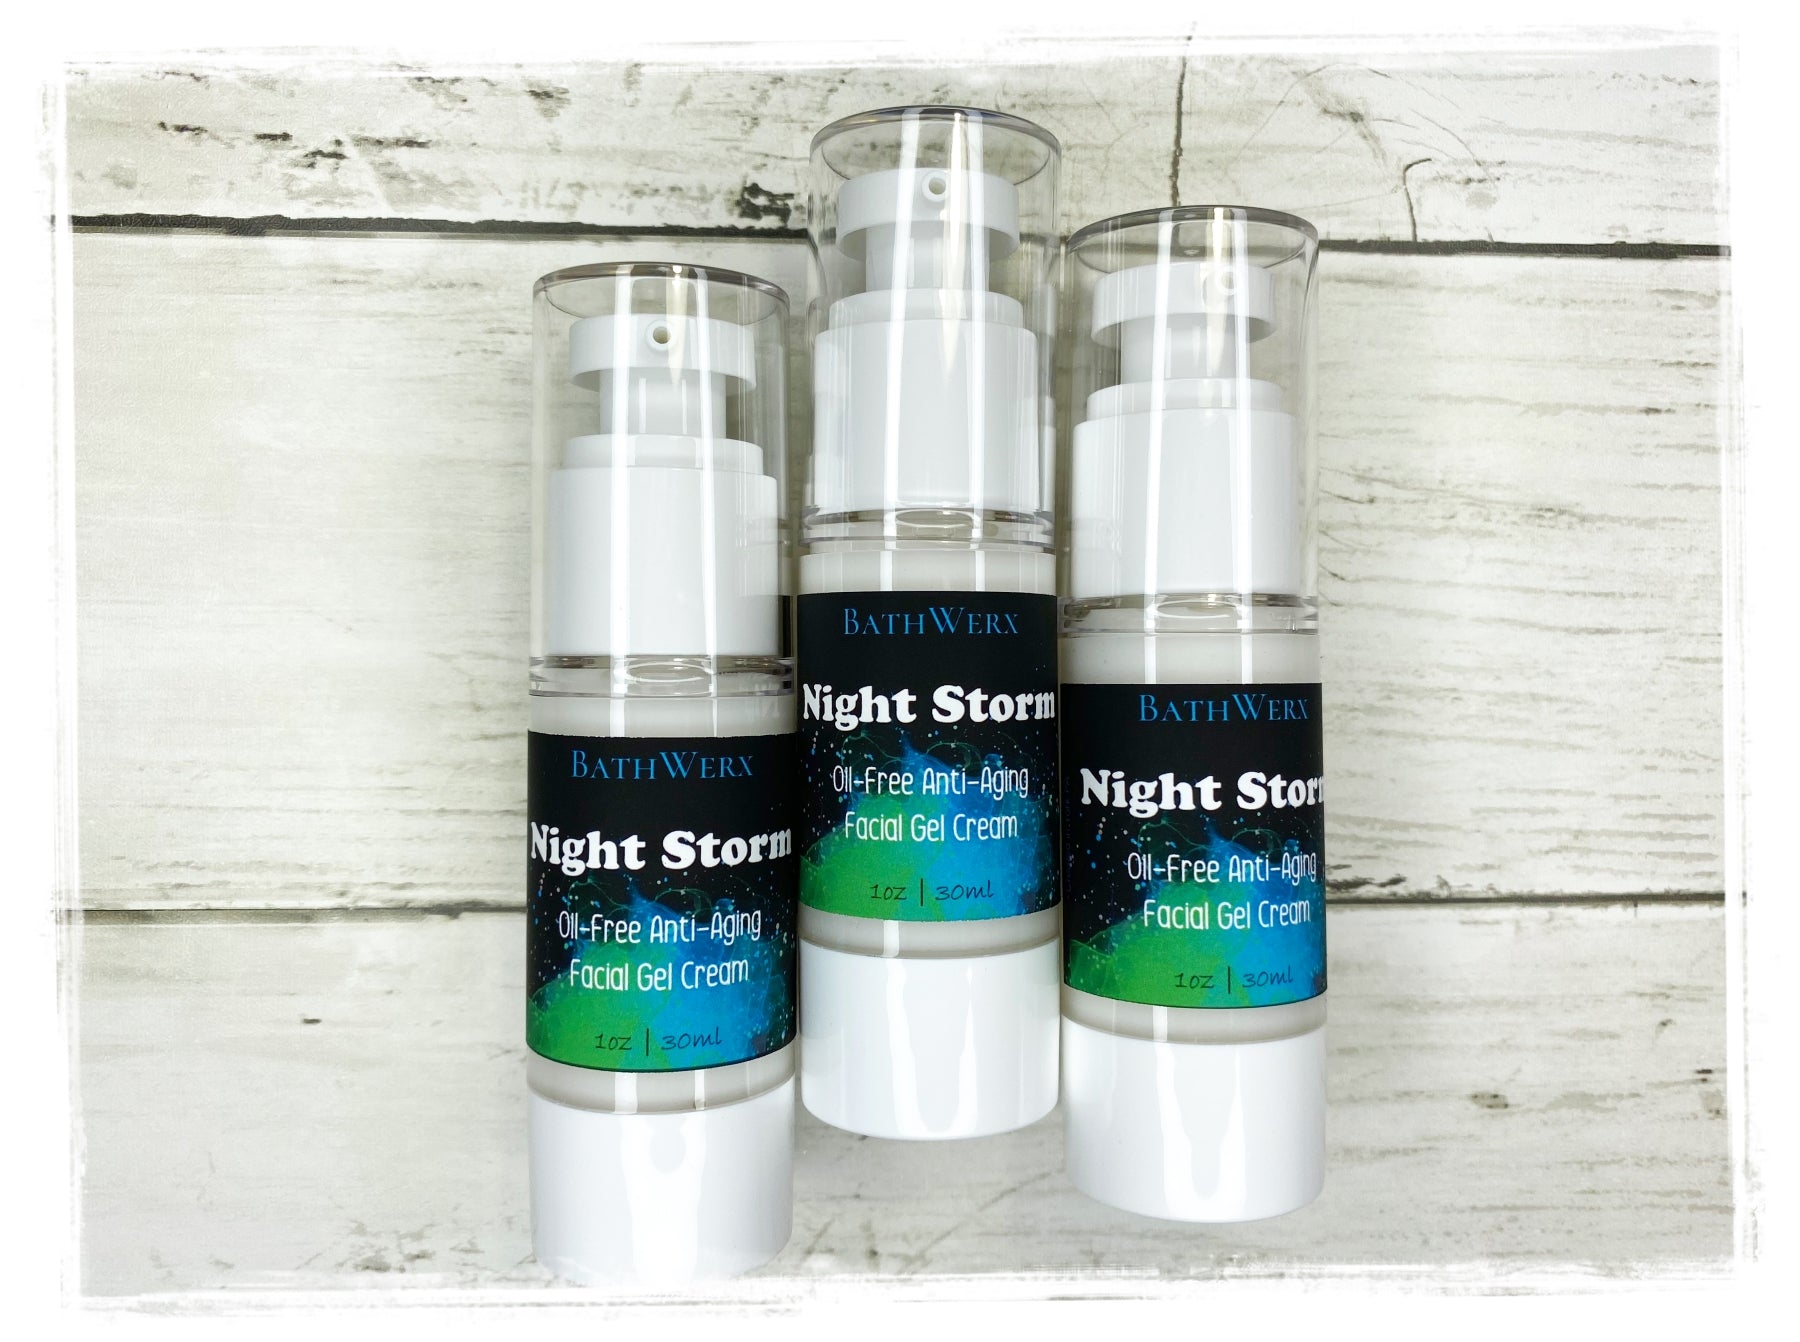 Night Storm Oil-Free Anti-Aging Facial Gel Cream